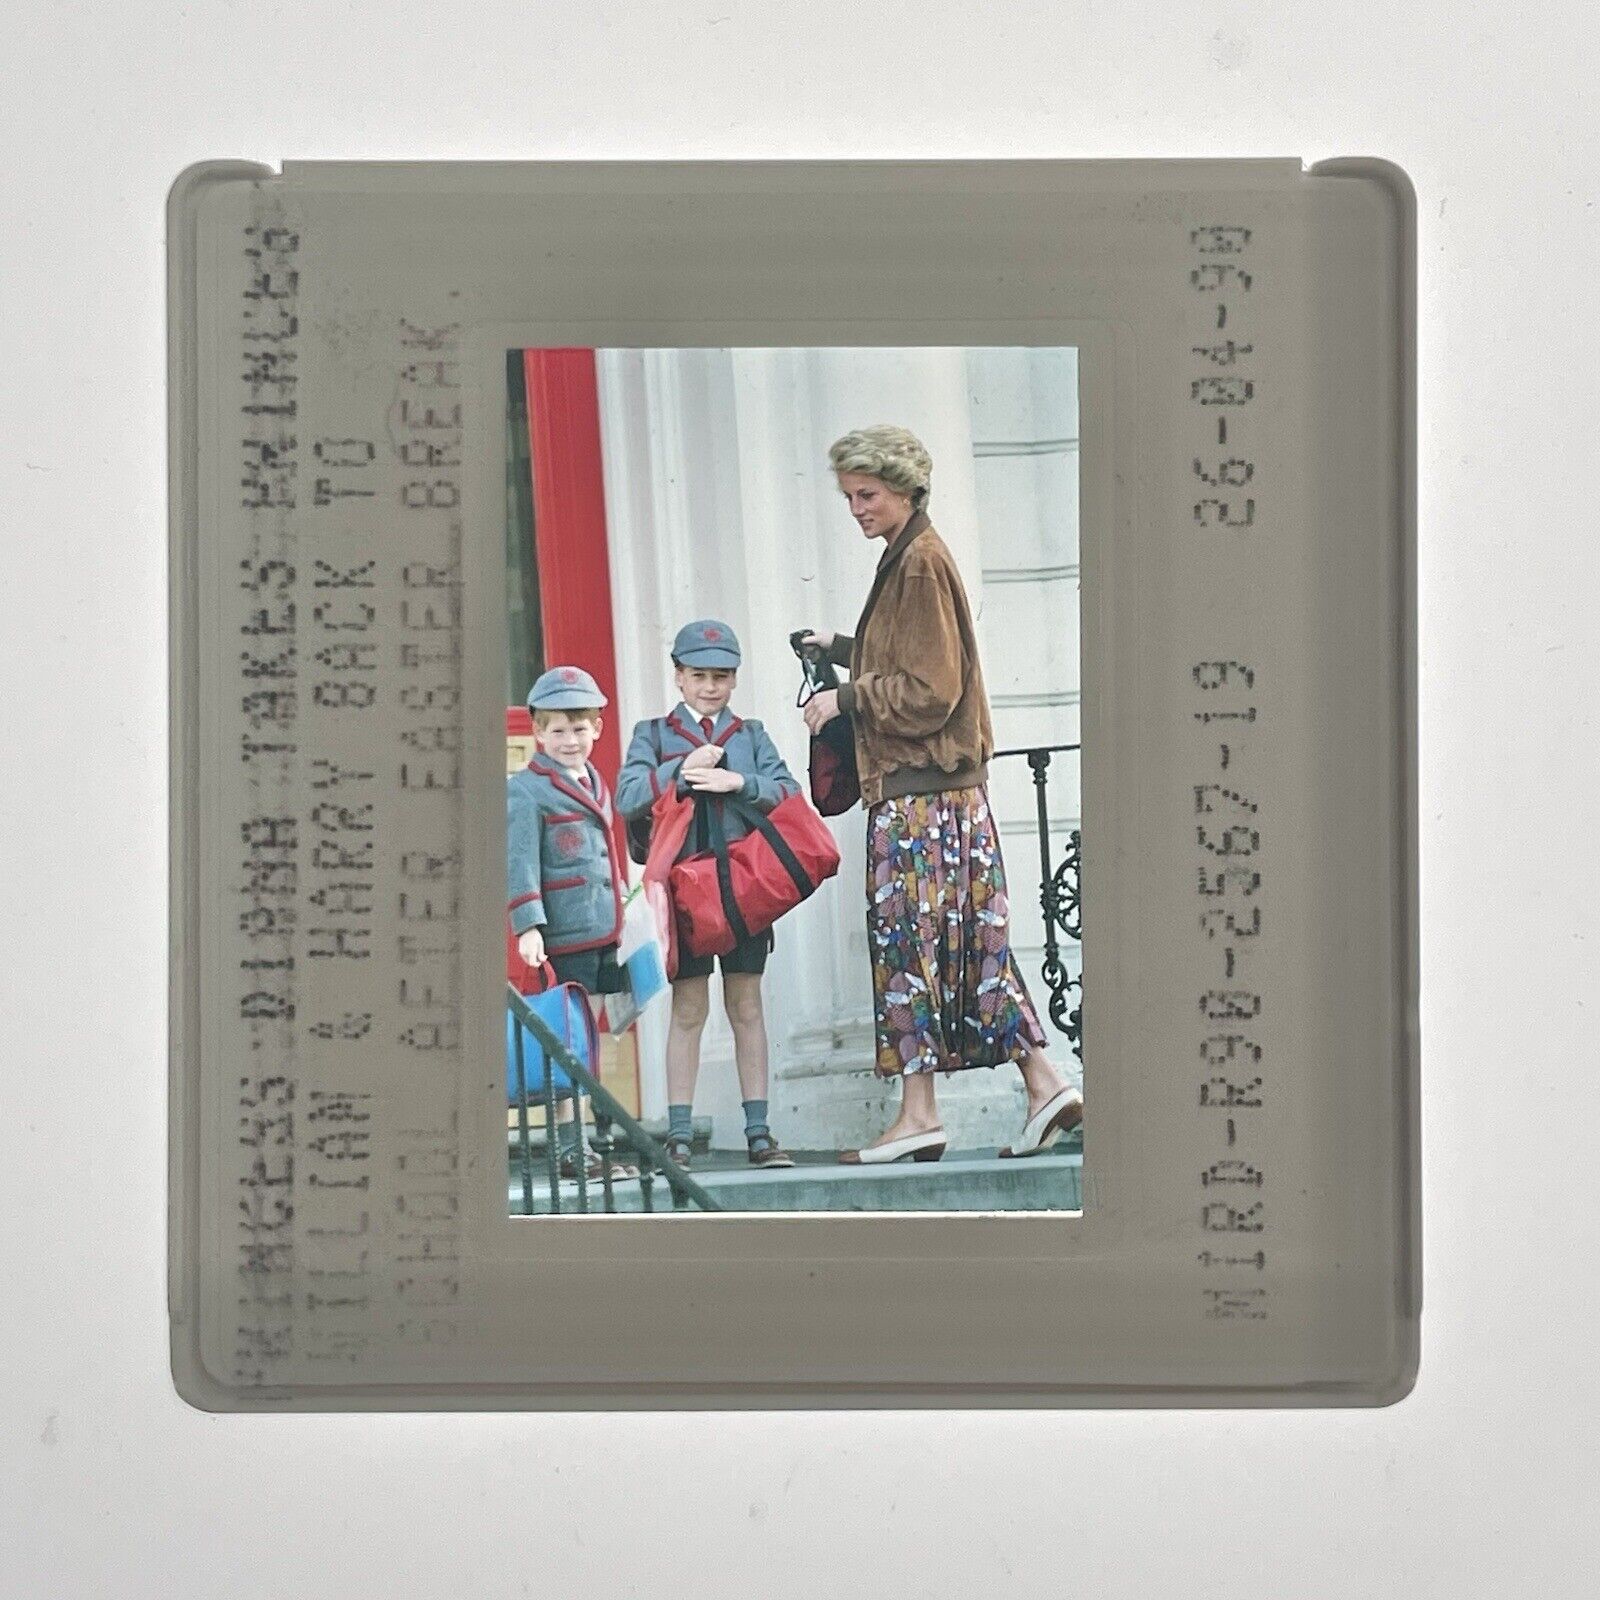 Princess Diana British Royal Family Harry William London S28720 SD12 35mm Slide